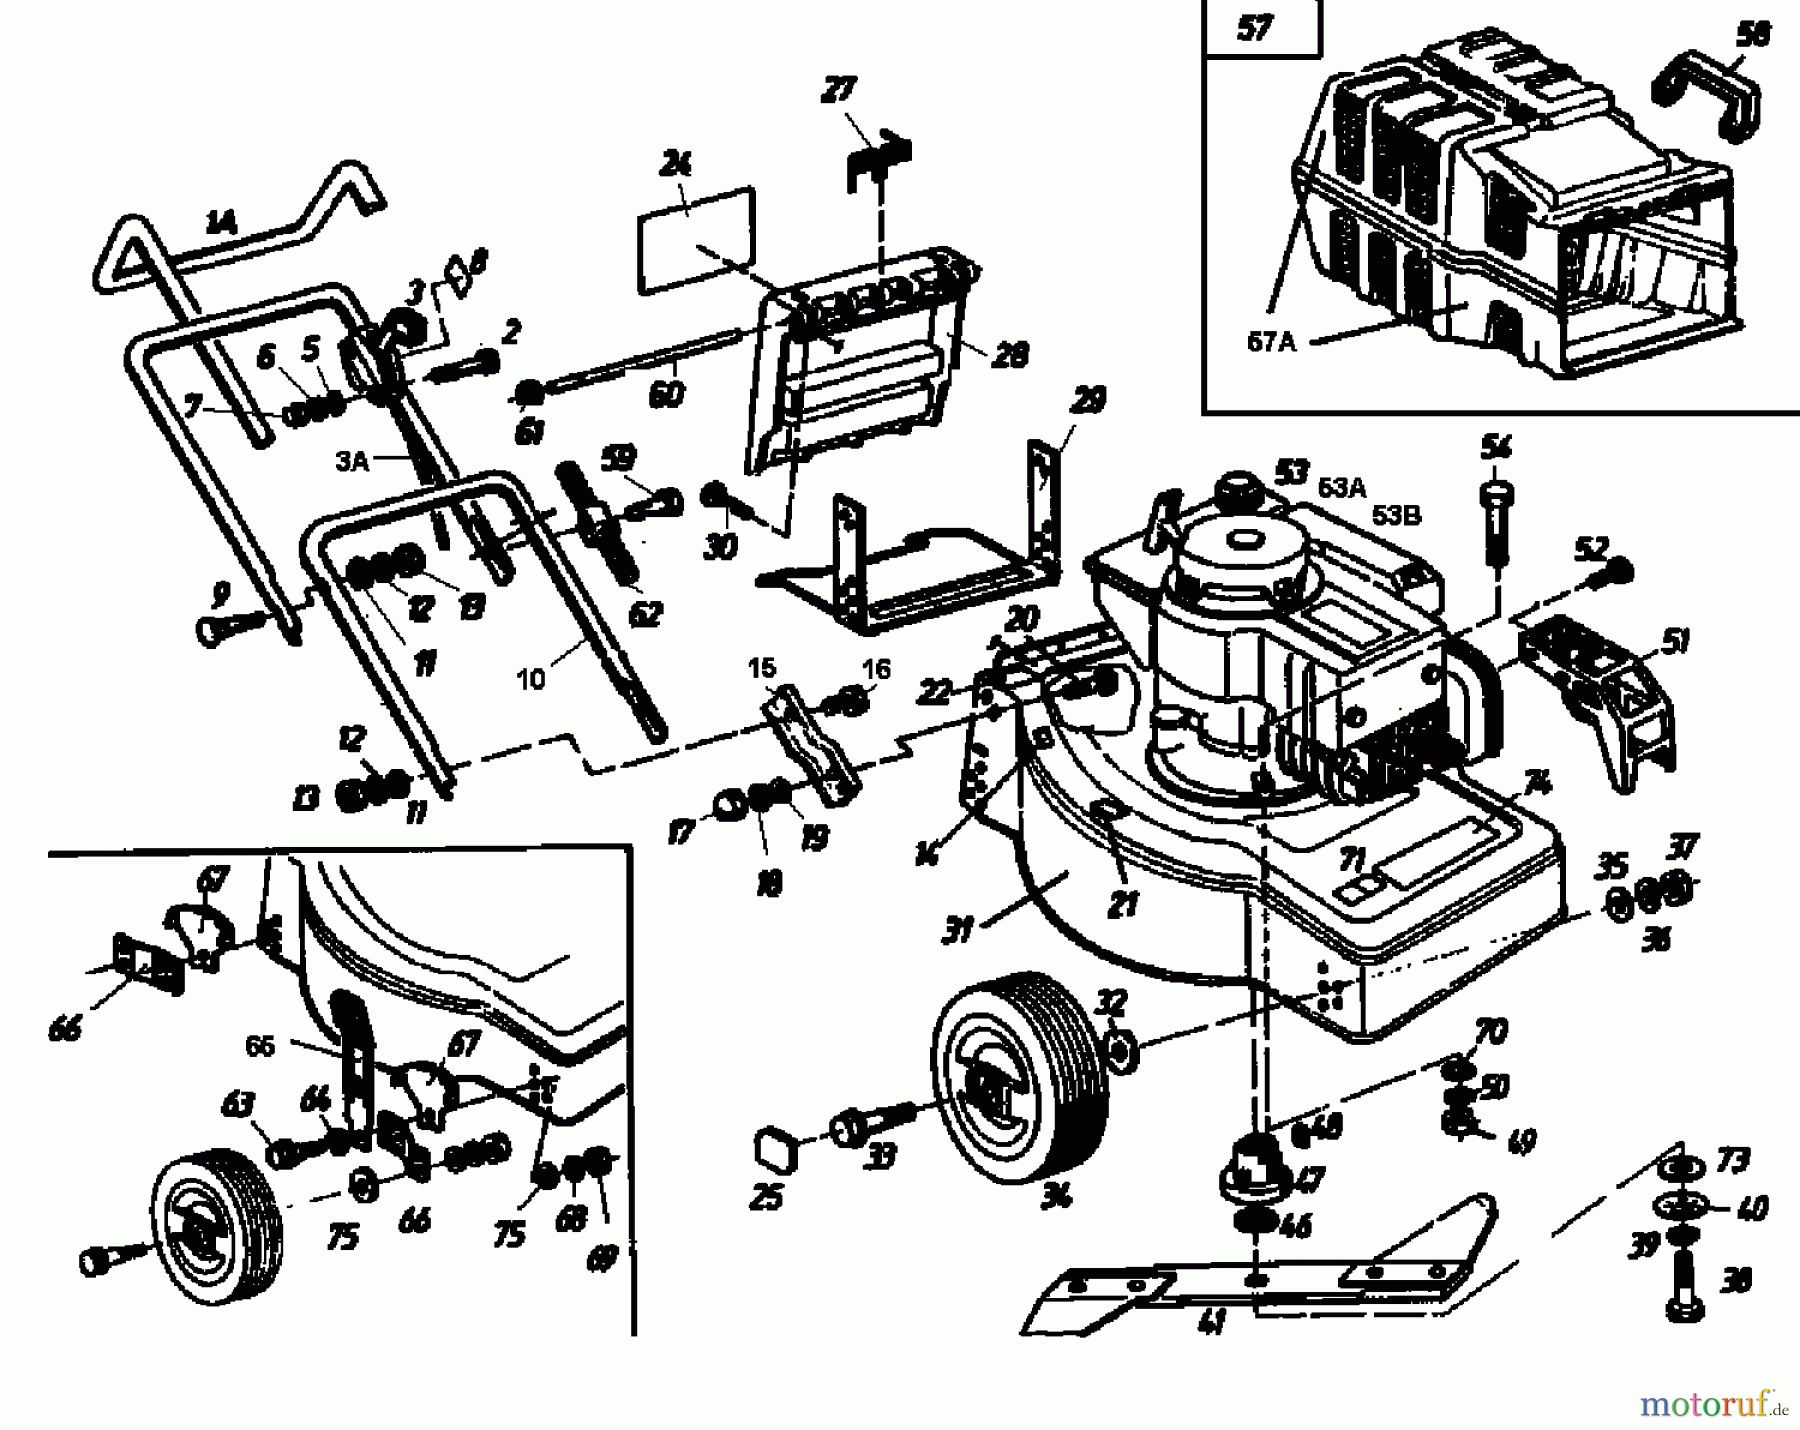  Golf Petrol mower HBL 02880.04  (1992) Basic machine